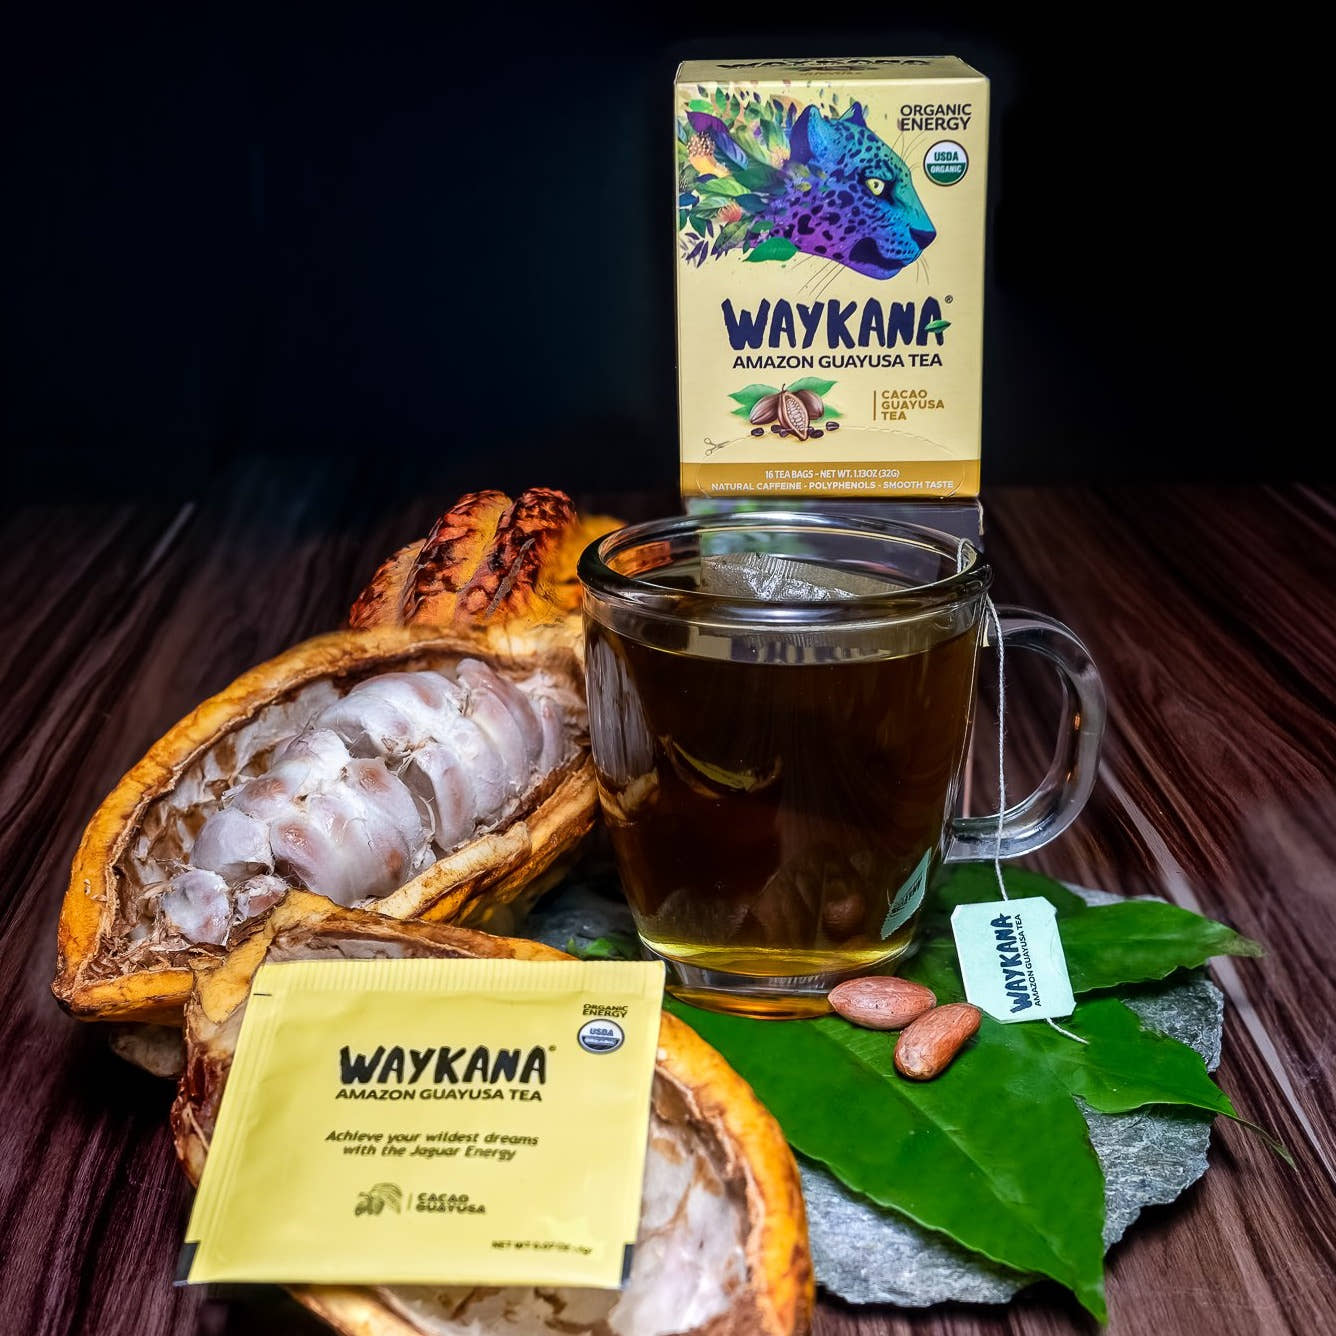 Cacao Guayusa Tea